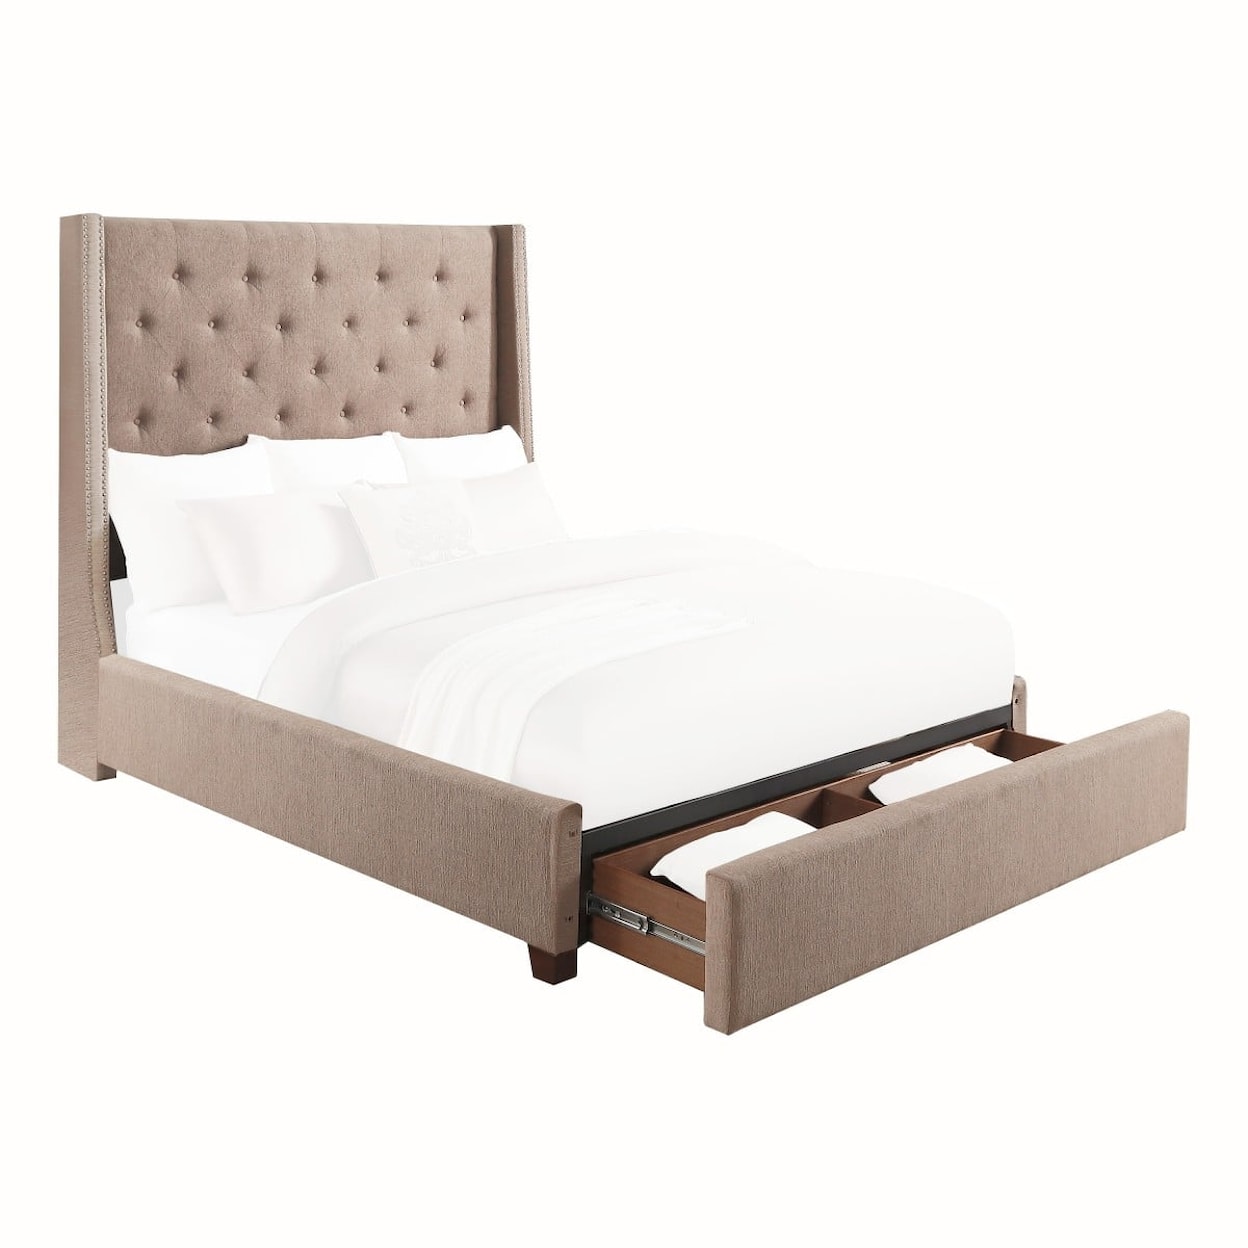 Homelegance Furniture Fairborn Full Bed